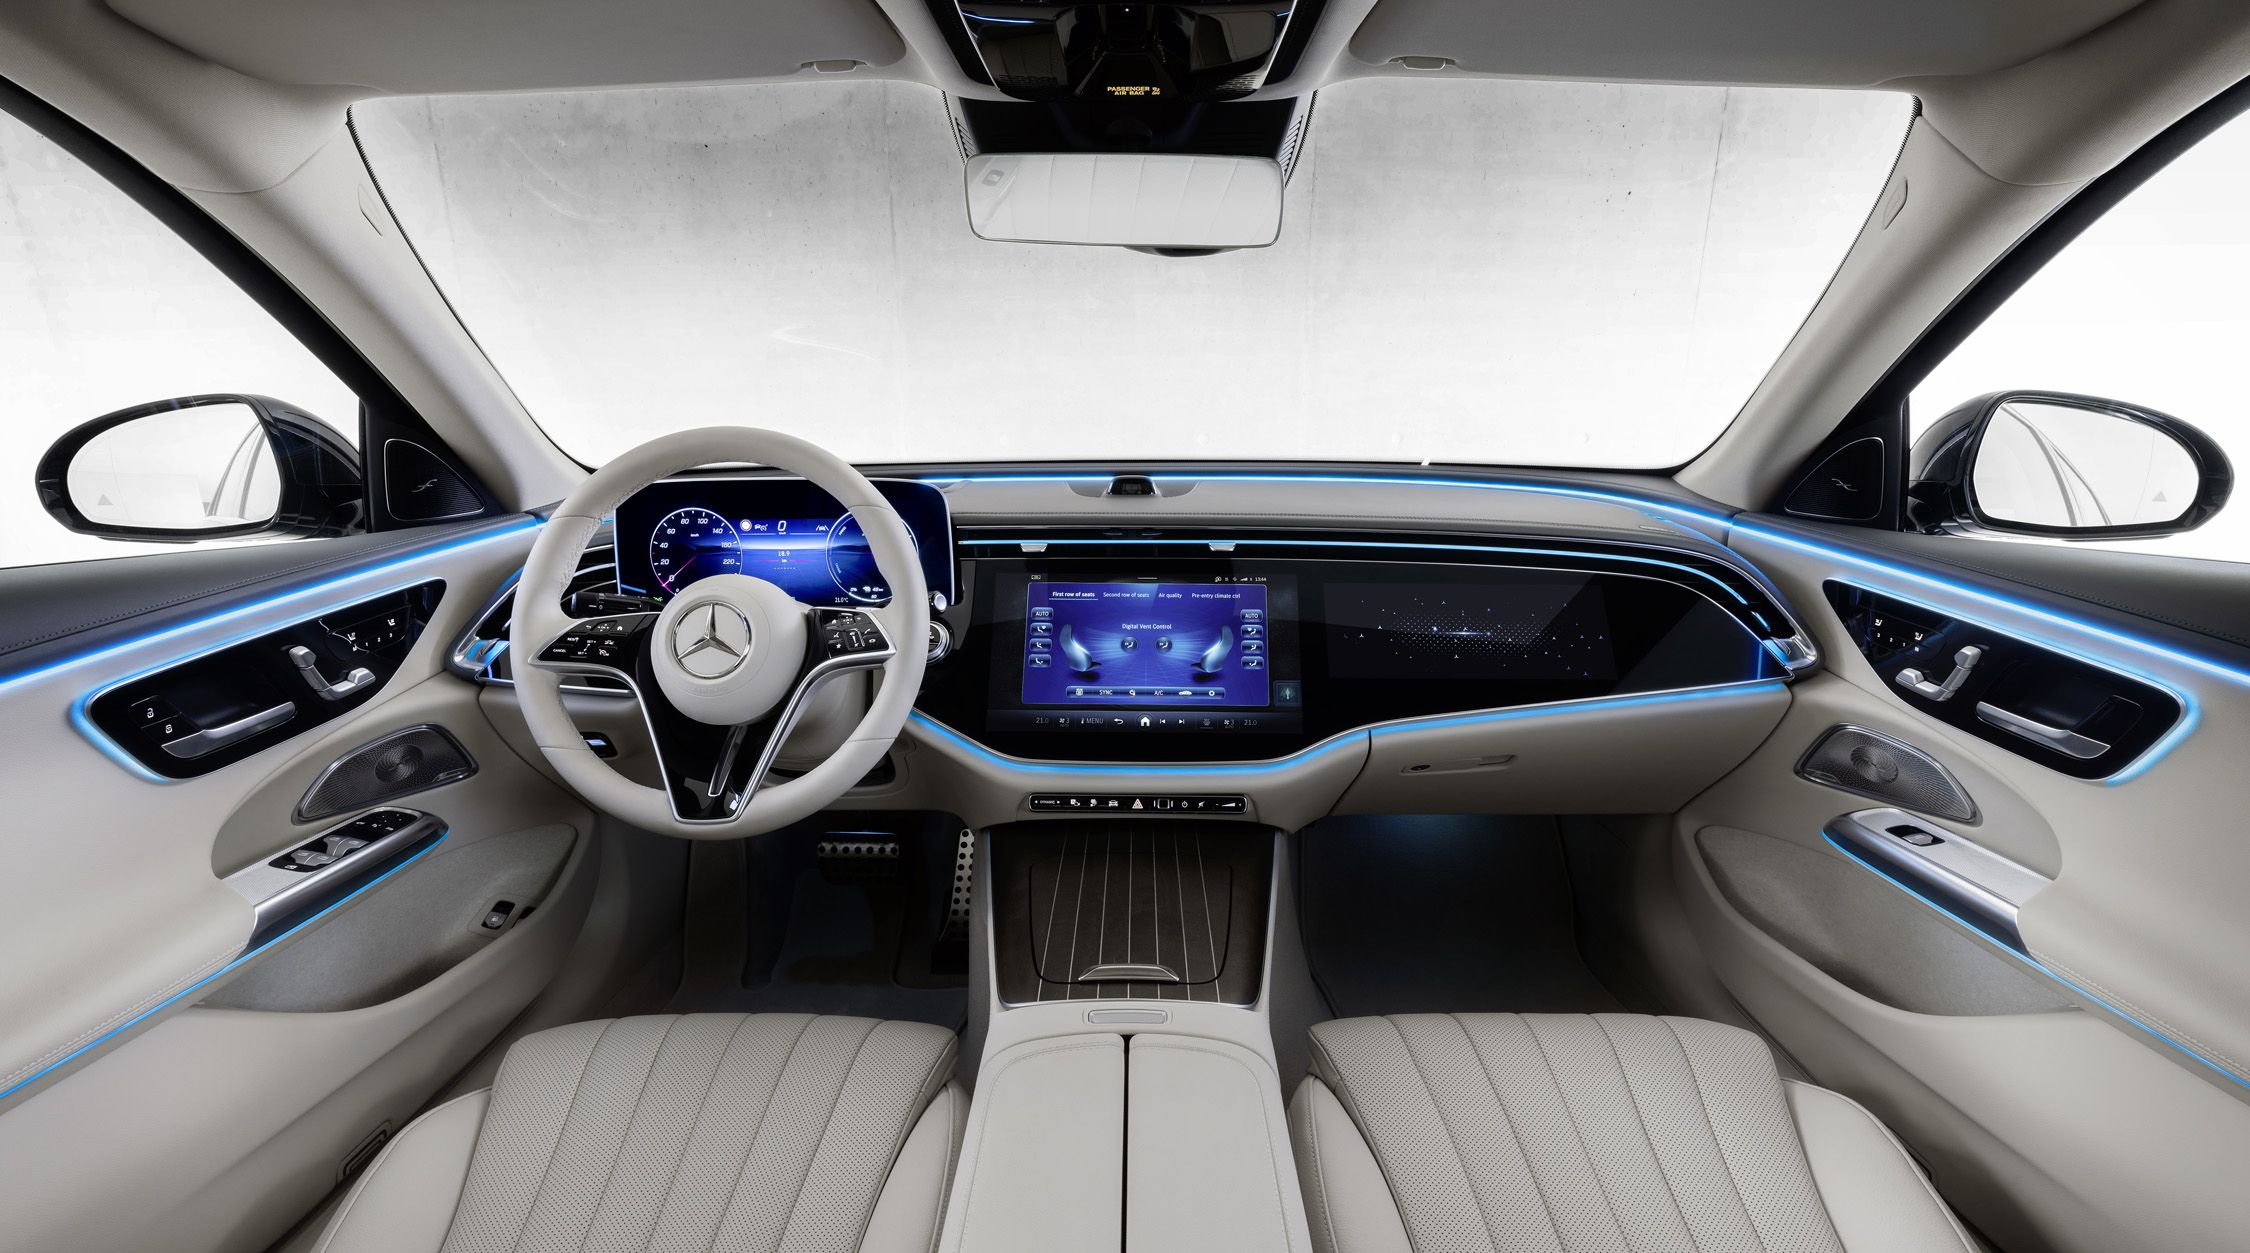 Mercedes-Benz E300 interior - Cockpit